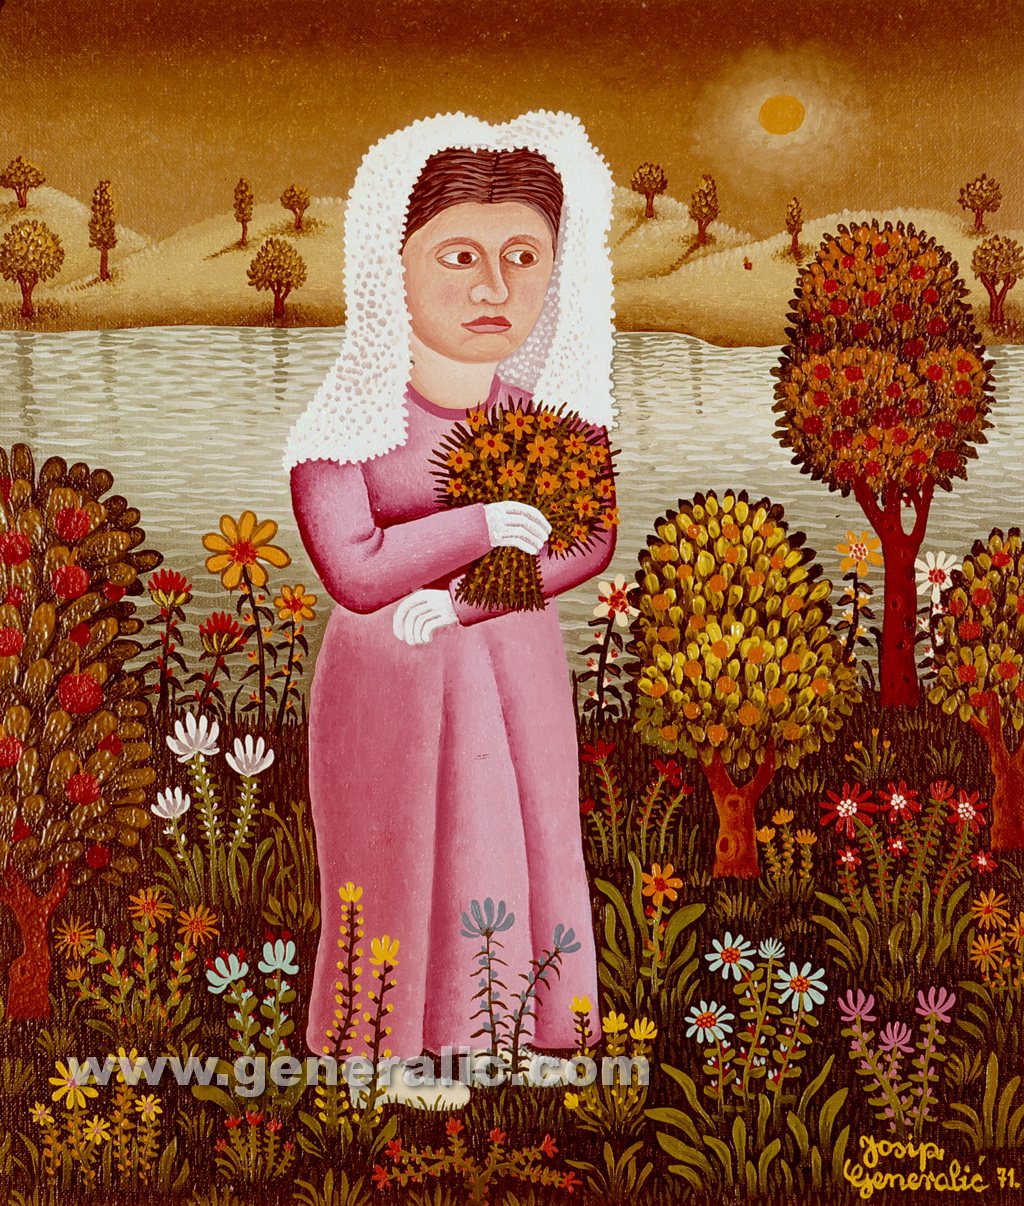 Josip Generalic, 1971, Bride by a river, oil on canvas